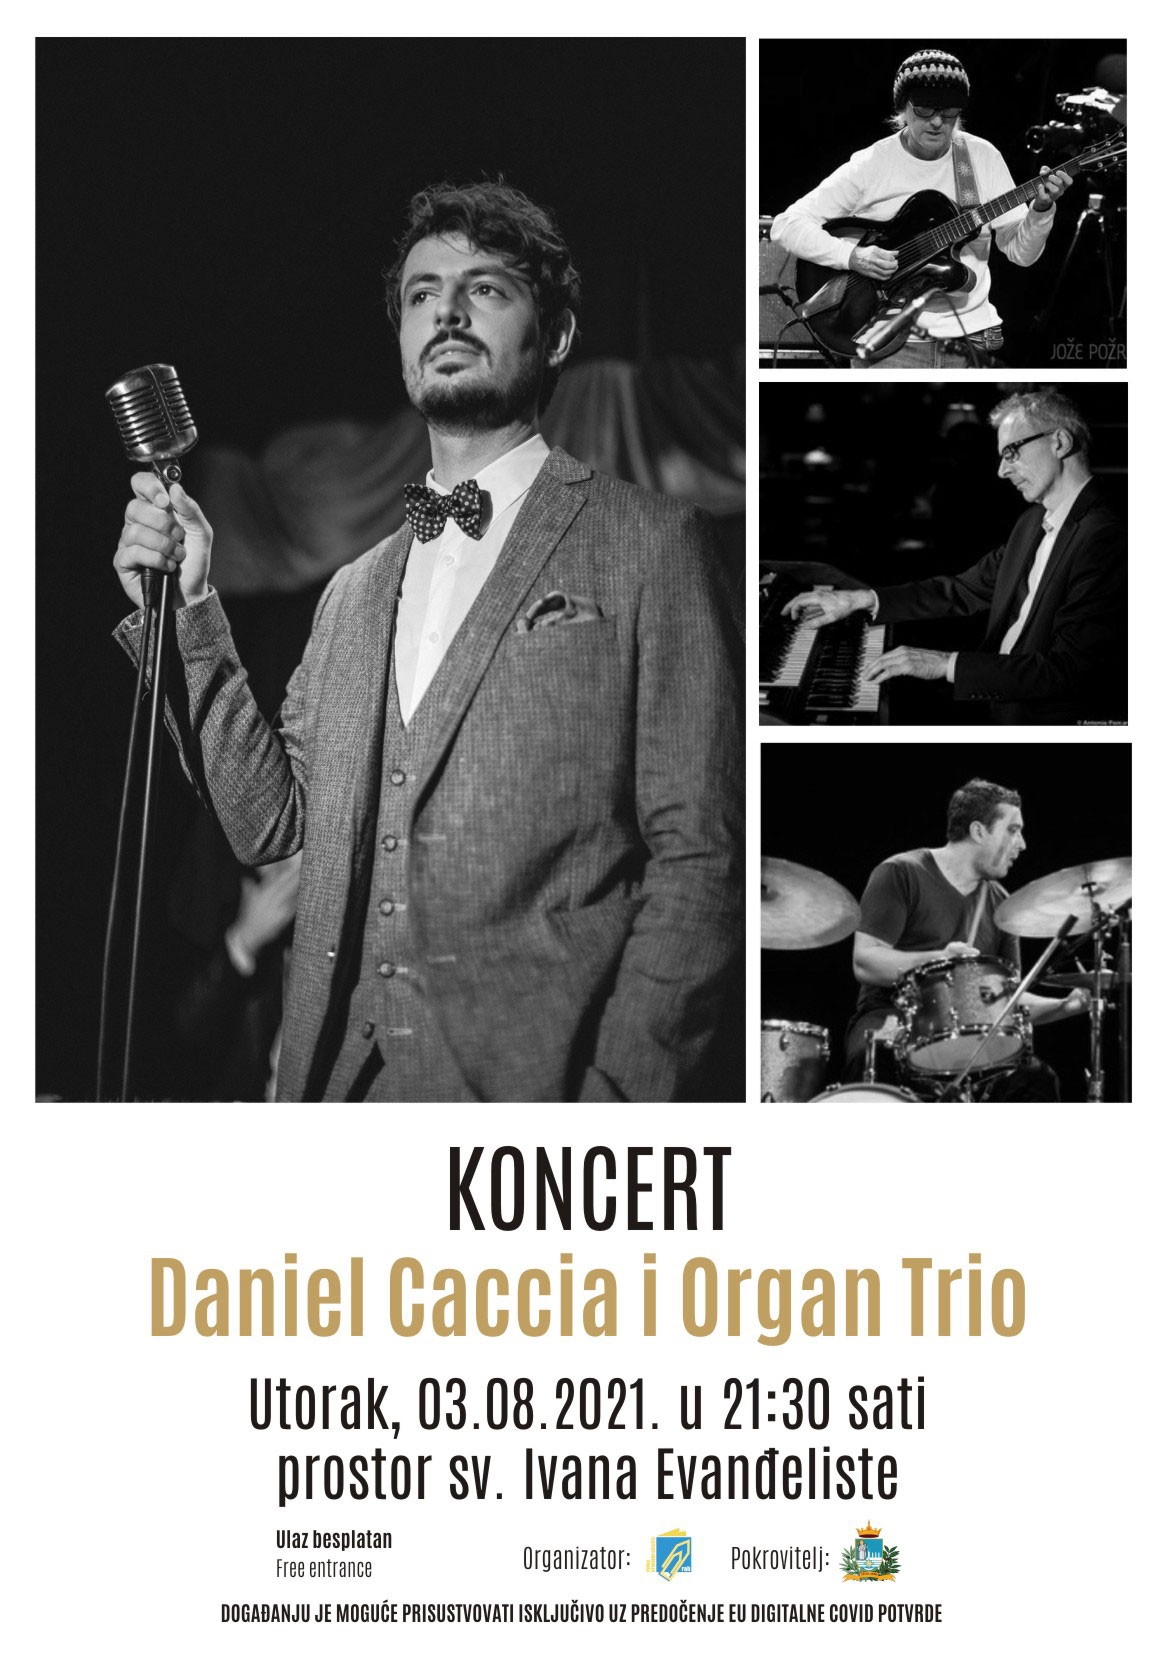 Koncert “Daniel Caccia i Organ Trio” | (uto.) 2.8.2021. u 21.30h – prostor sv. Ivana Evanđeliste